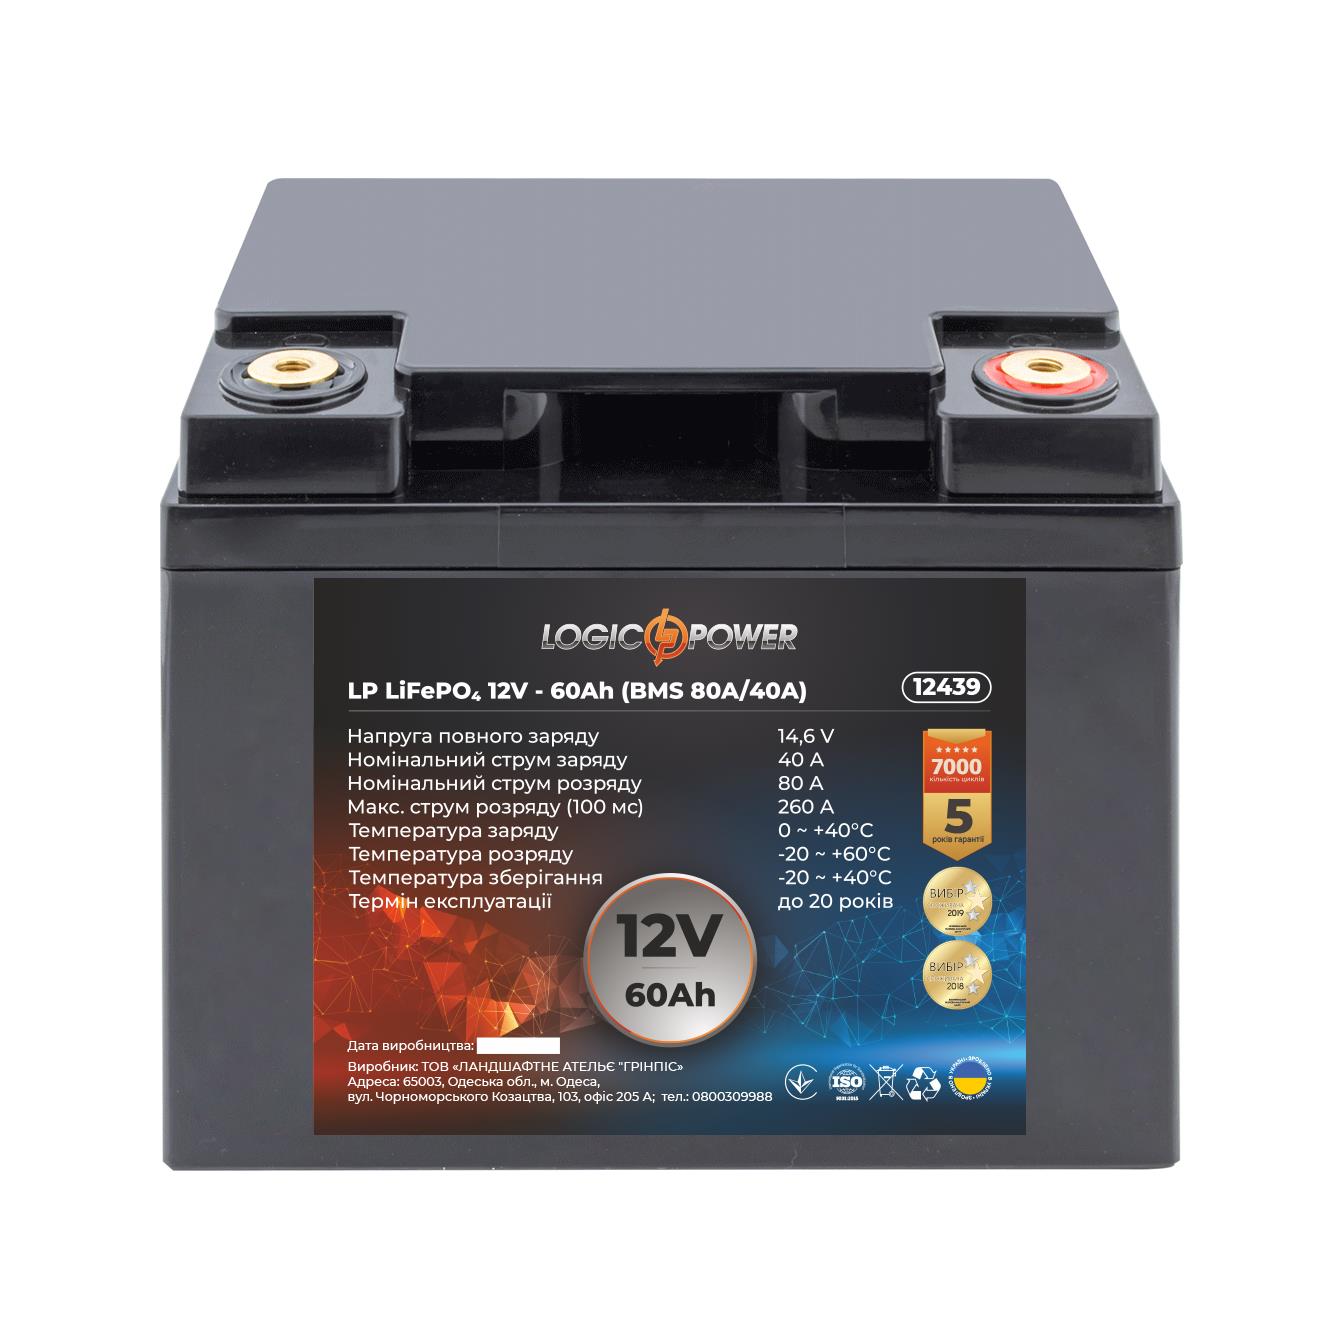 Аккумулятор литий-железо-фосфатный LogicPower LP LiFePO4 12V - 60 Ah (BMS 80A/40А) пластик (12439) в интернет-магазине, главное фото